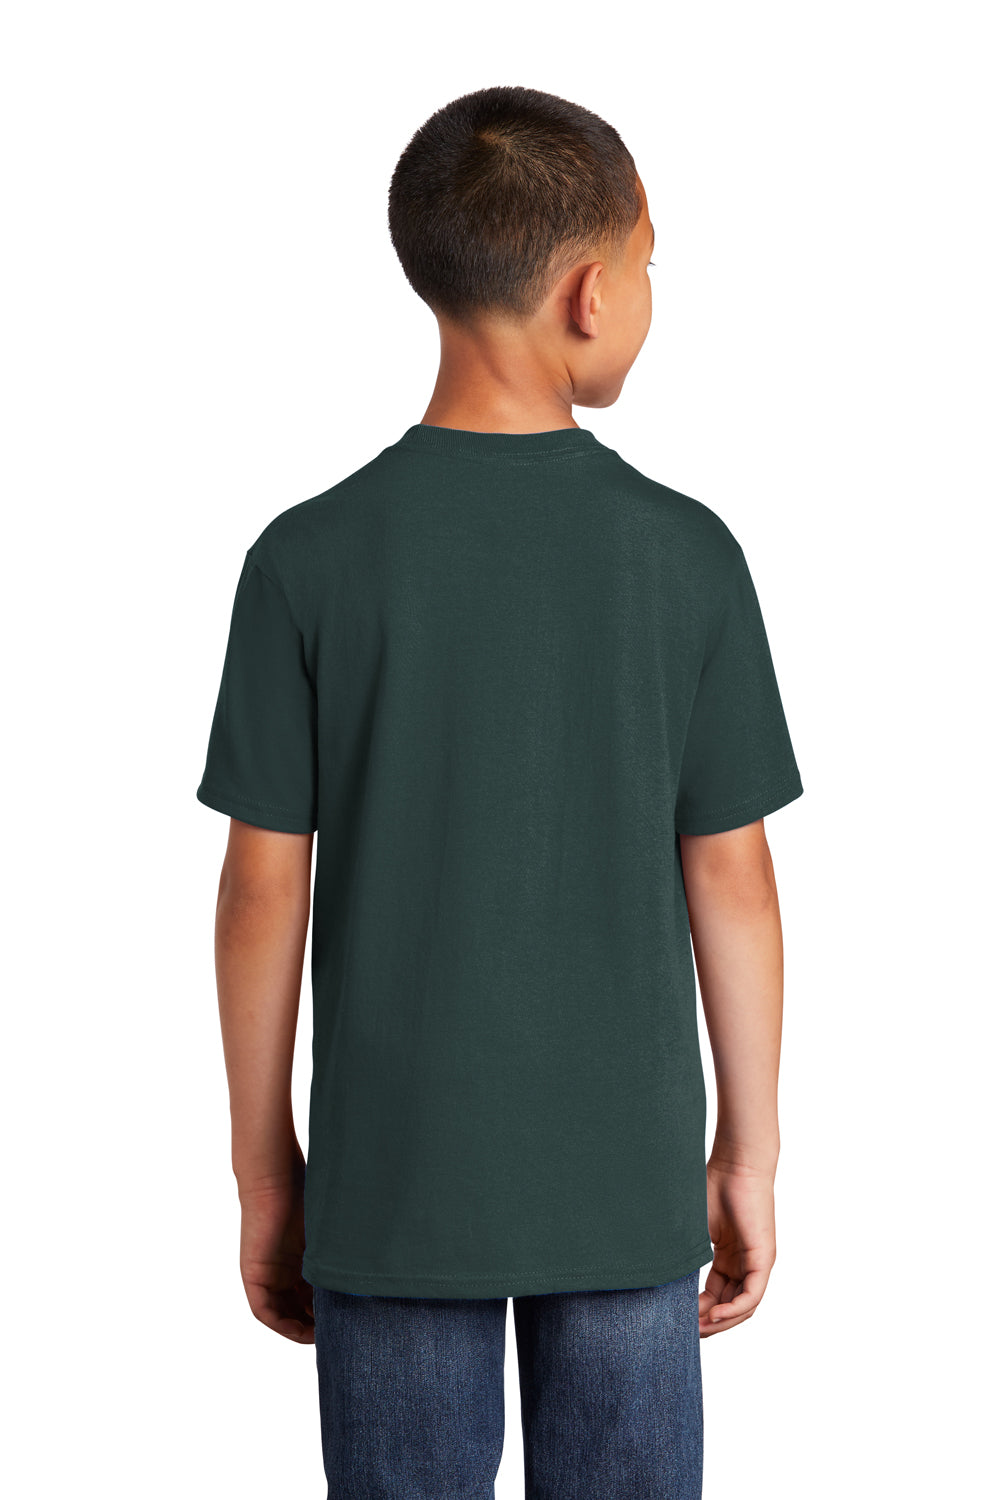 Port & Company PC54Y Youth Core Short Sleeve Crewneck T-Shirt Dark Green Back